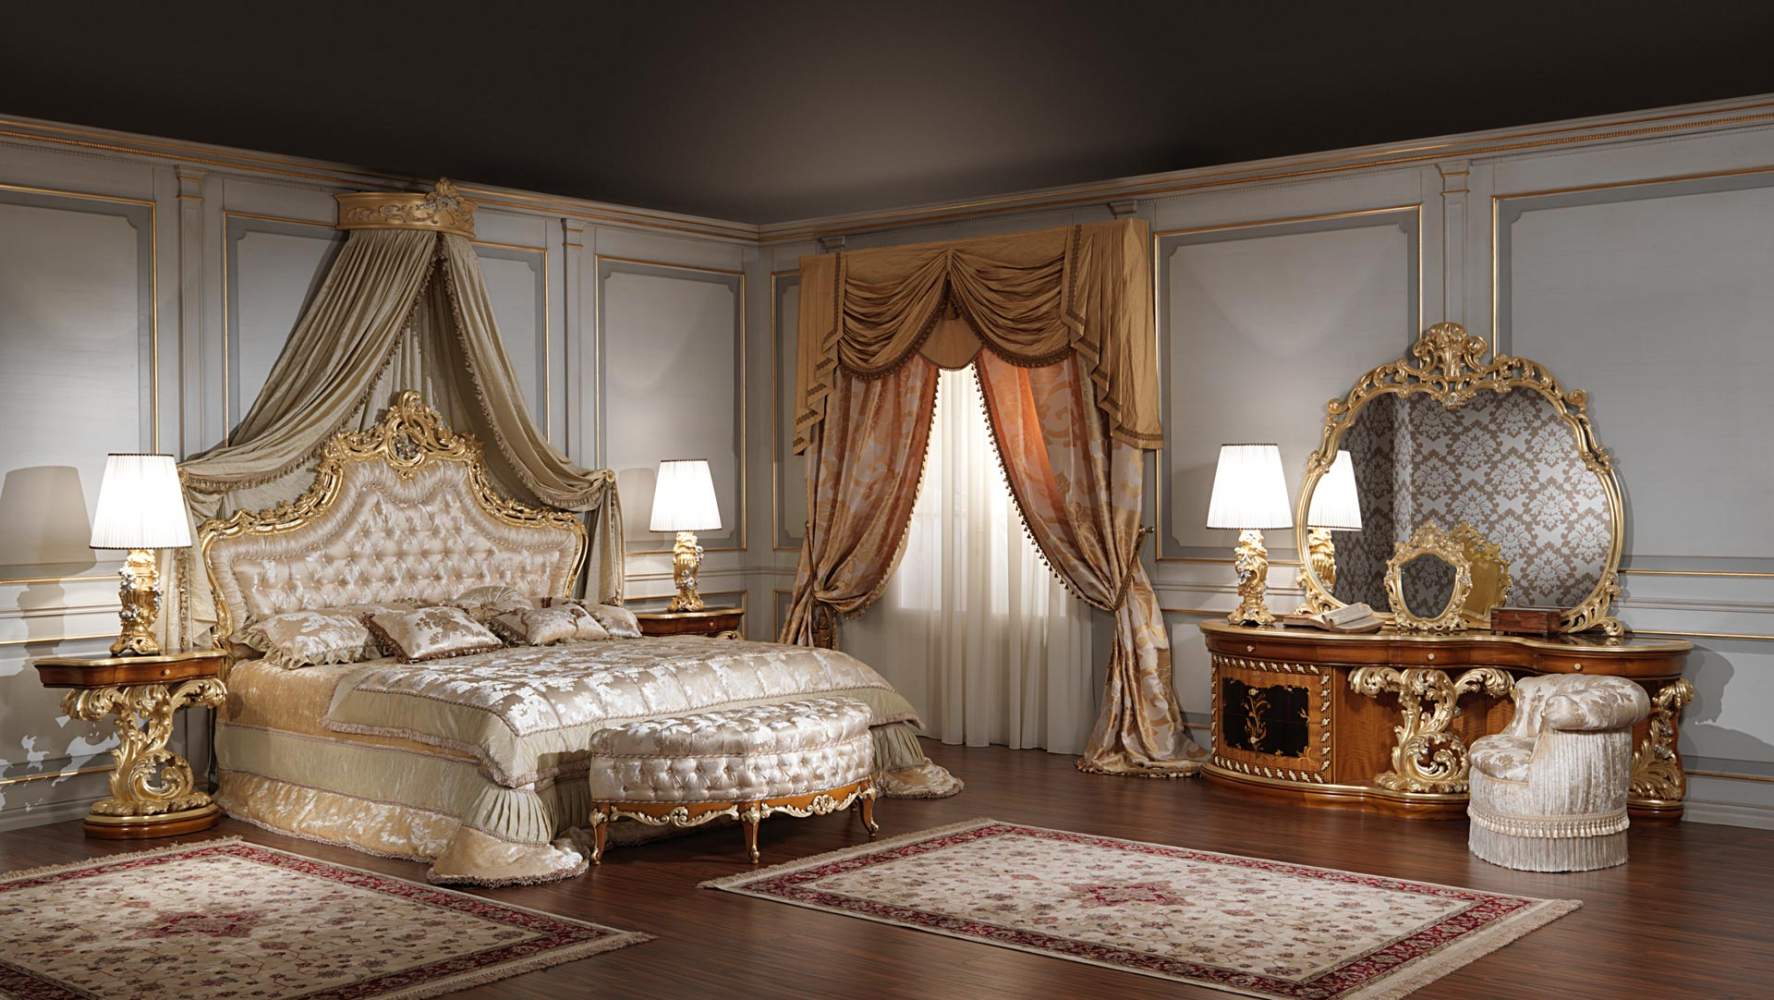 Chambre à coucher baroque art. 2012 en style baroque romain | Vimercati